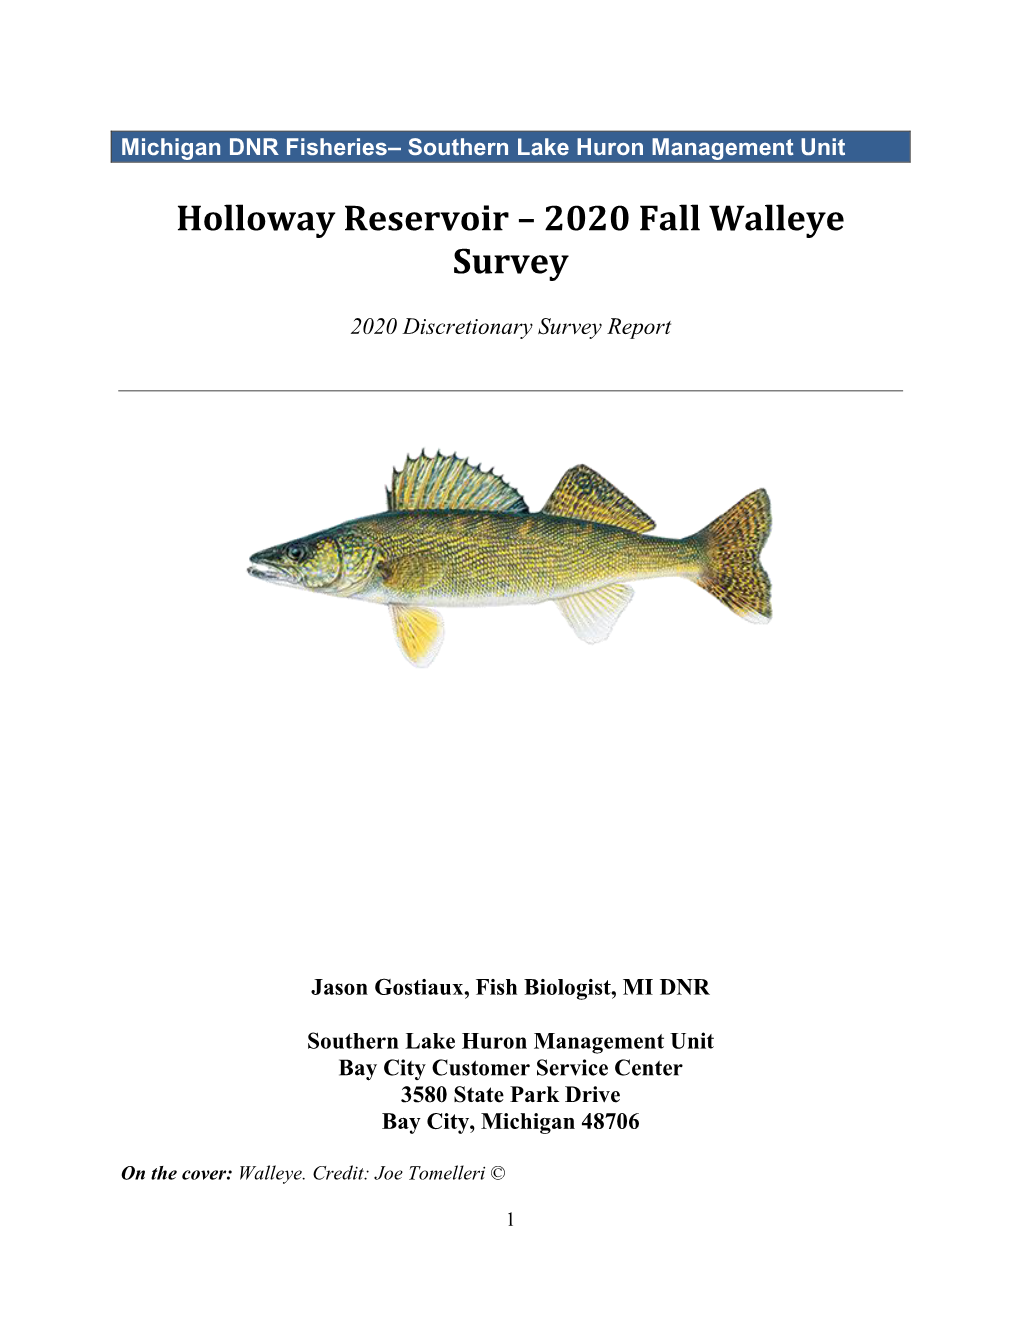 Holloway Reservoir – 2020 Fall Walleye Survey